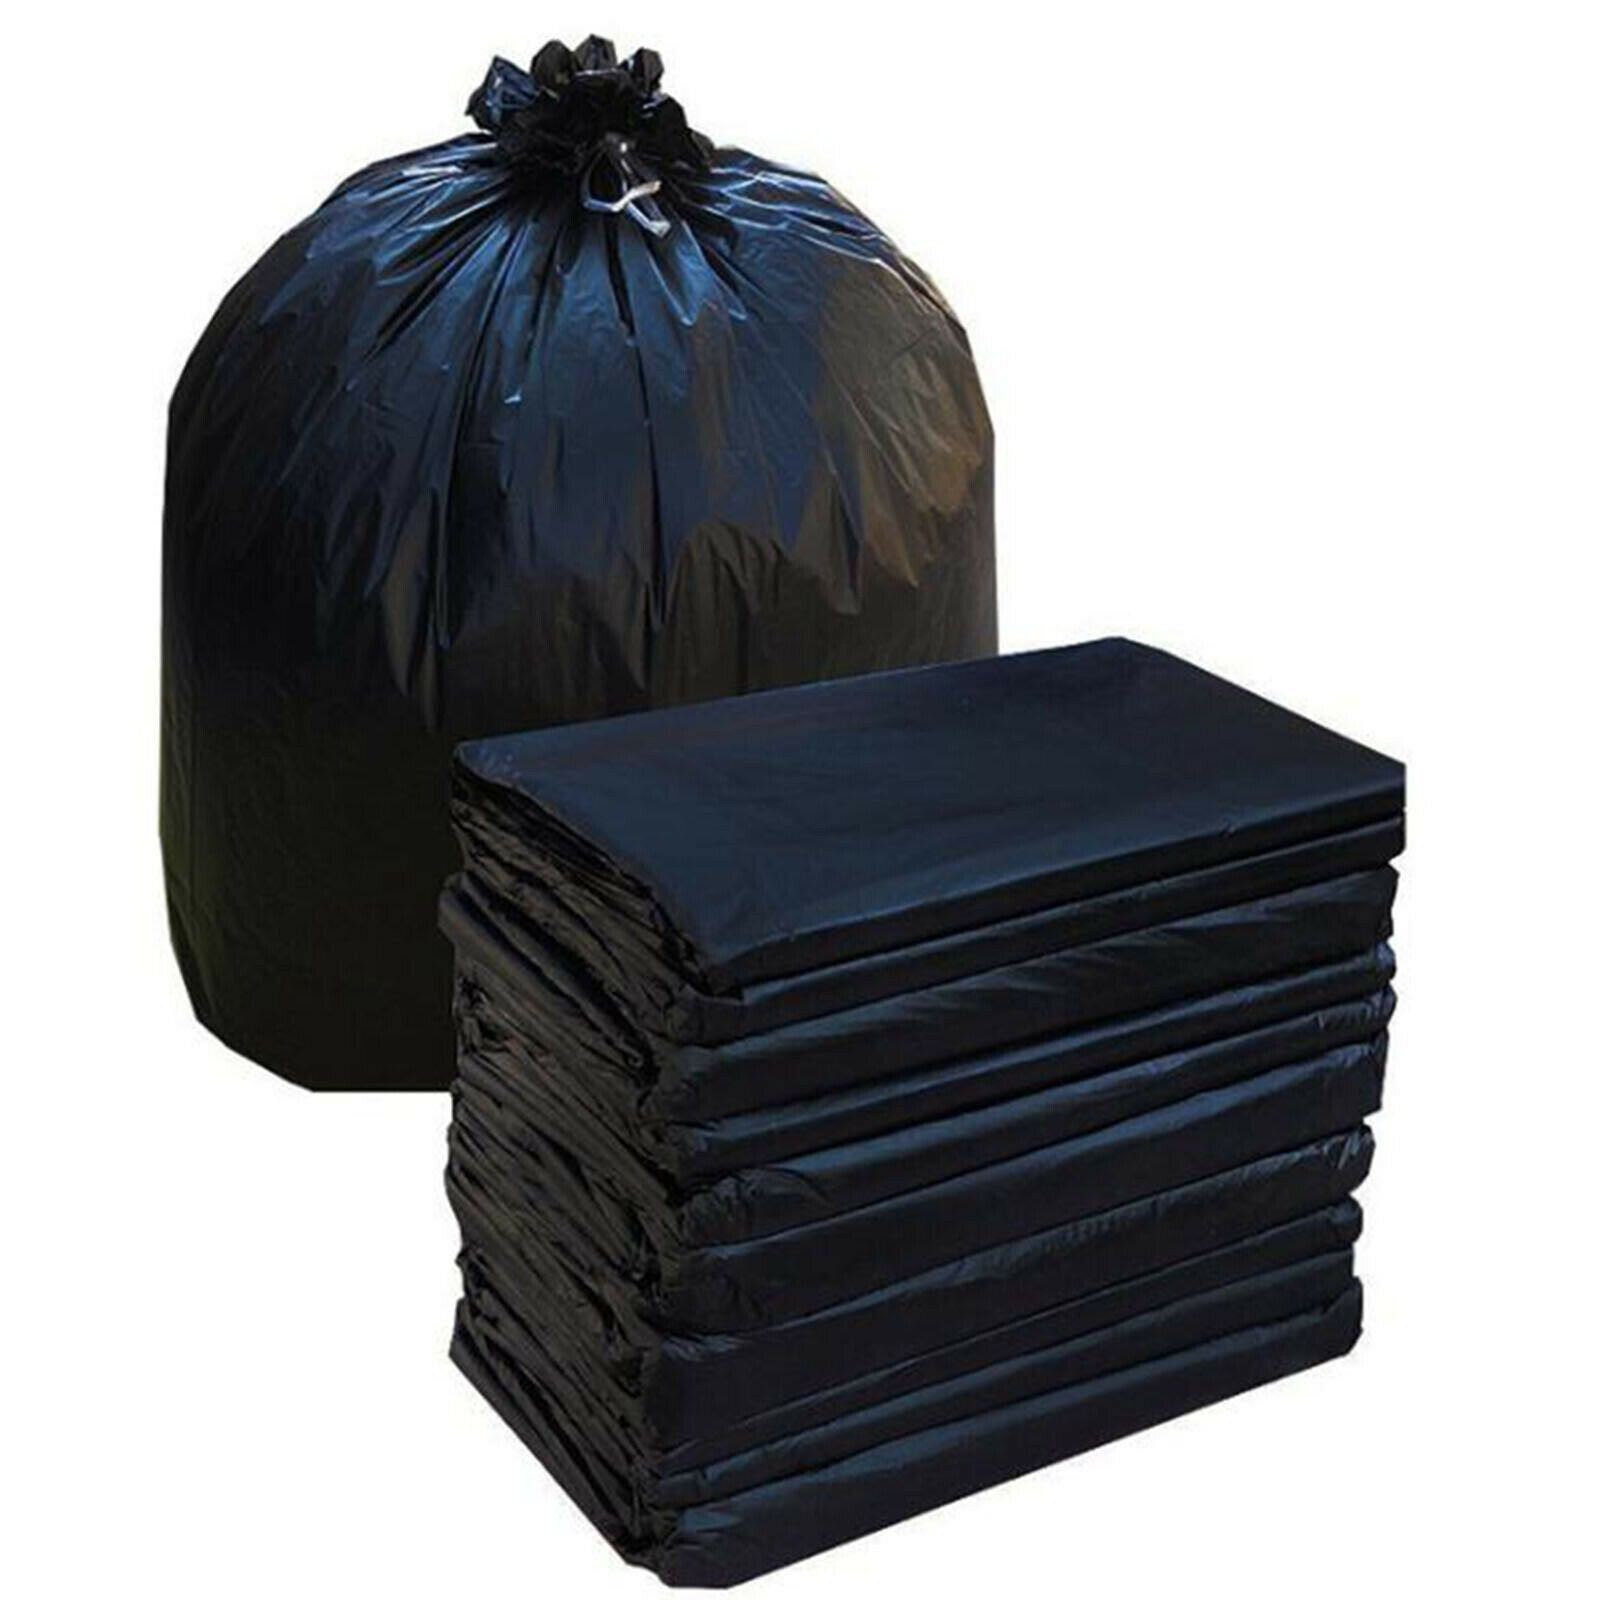 Black contractor bags